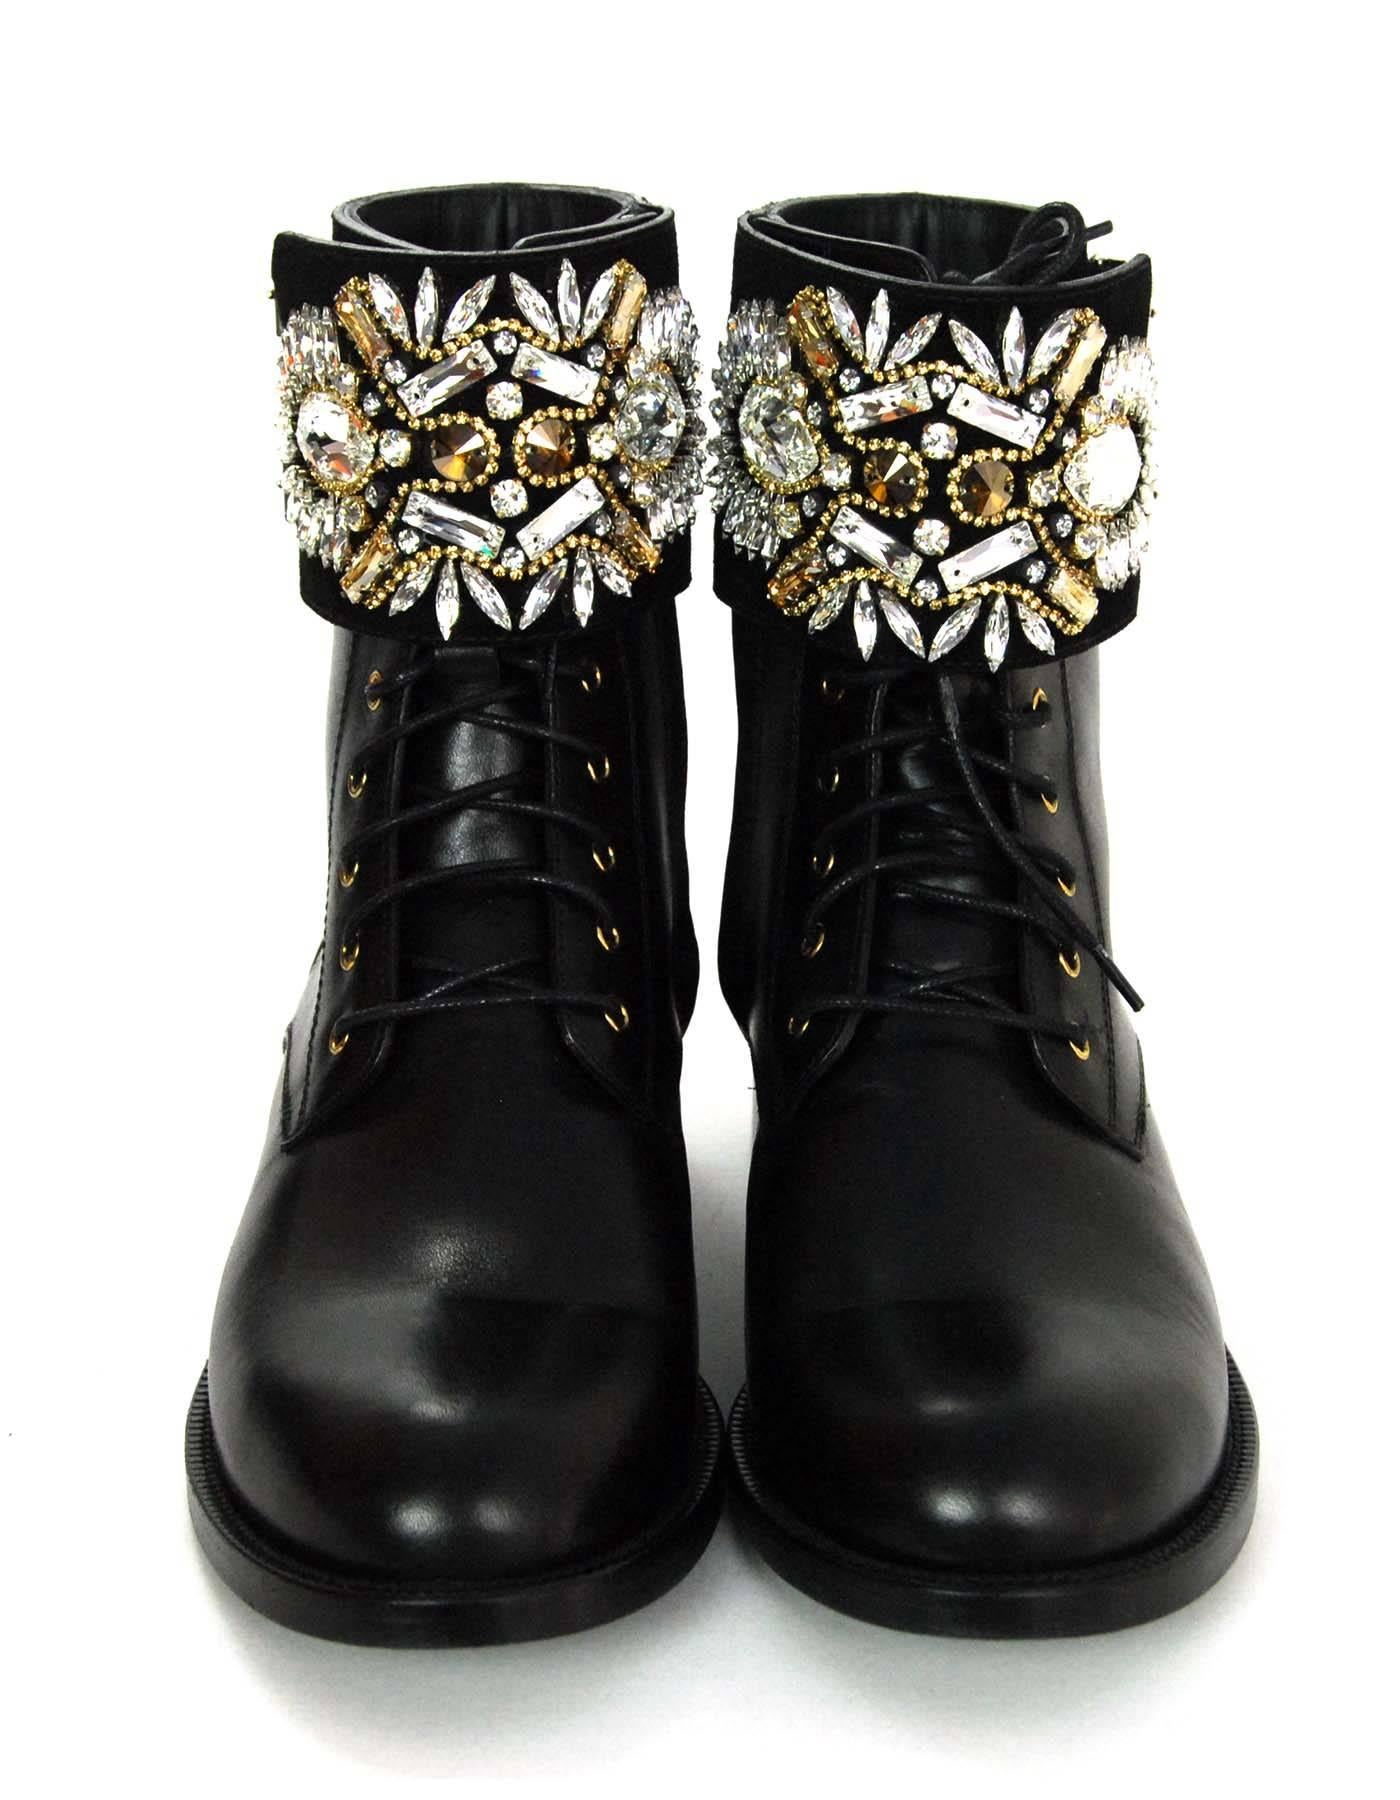 jeweled boots